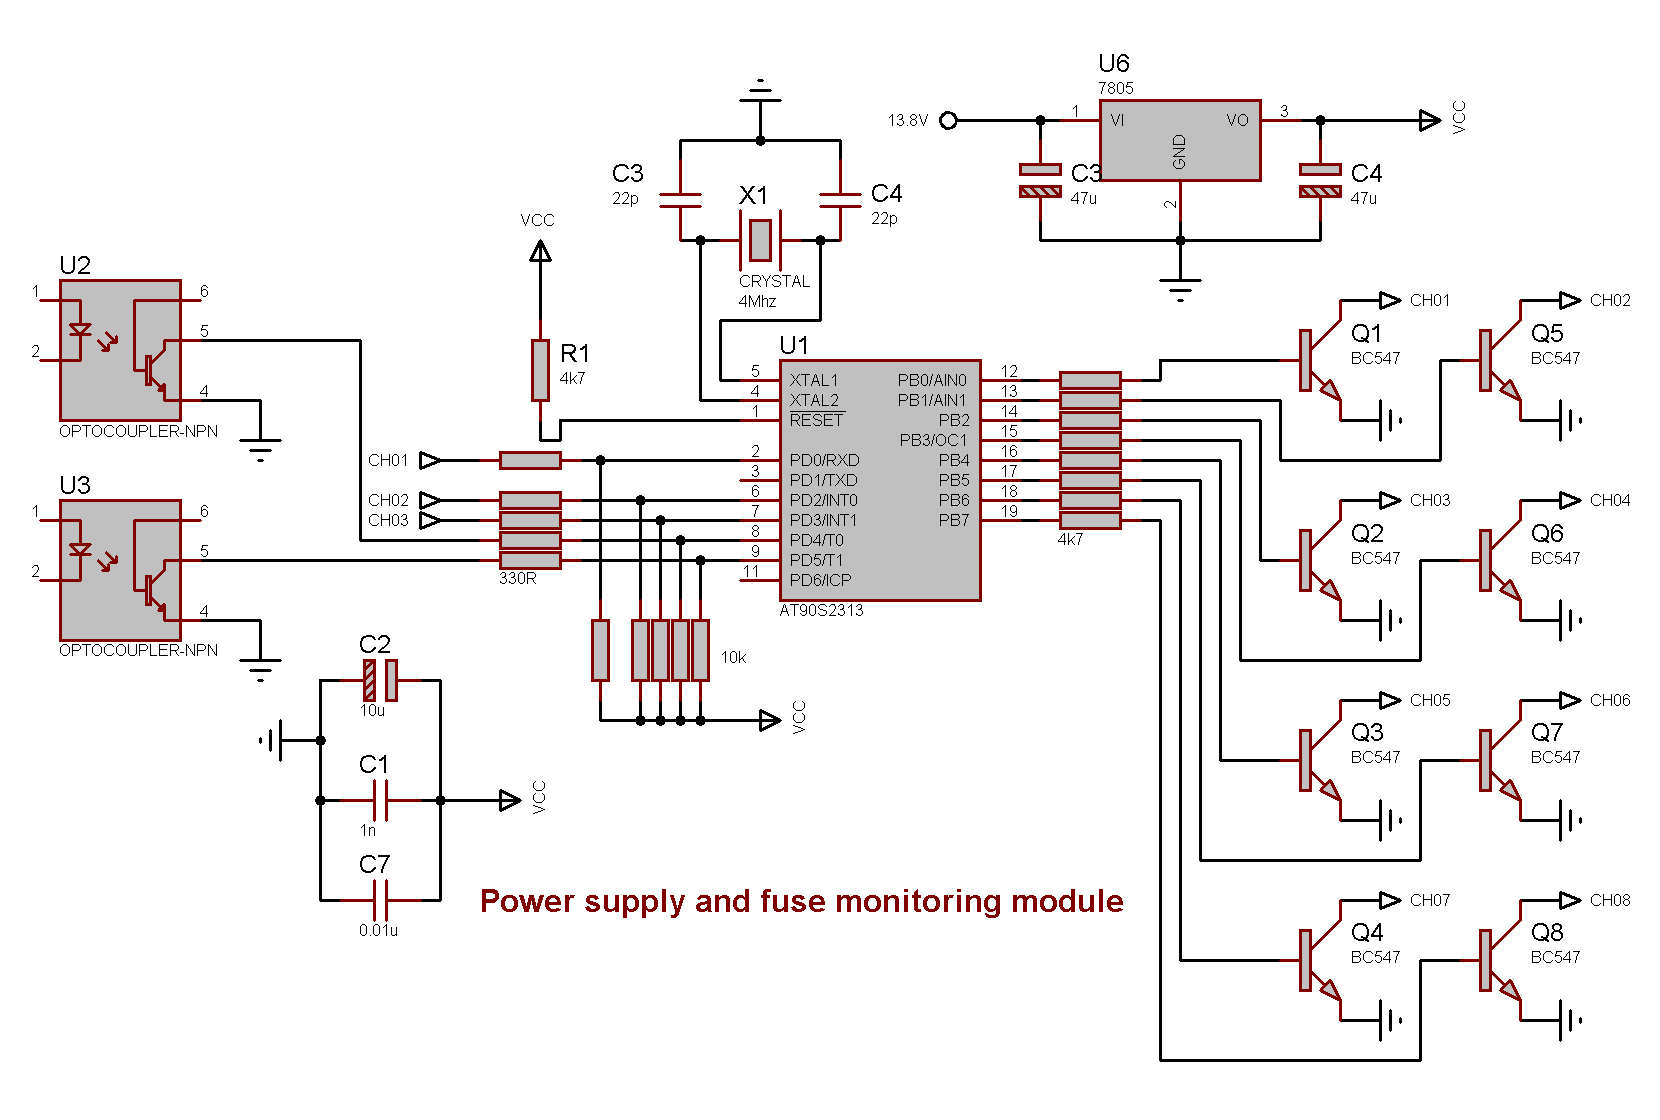 Schematics for the monitoring module